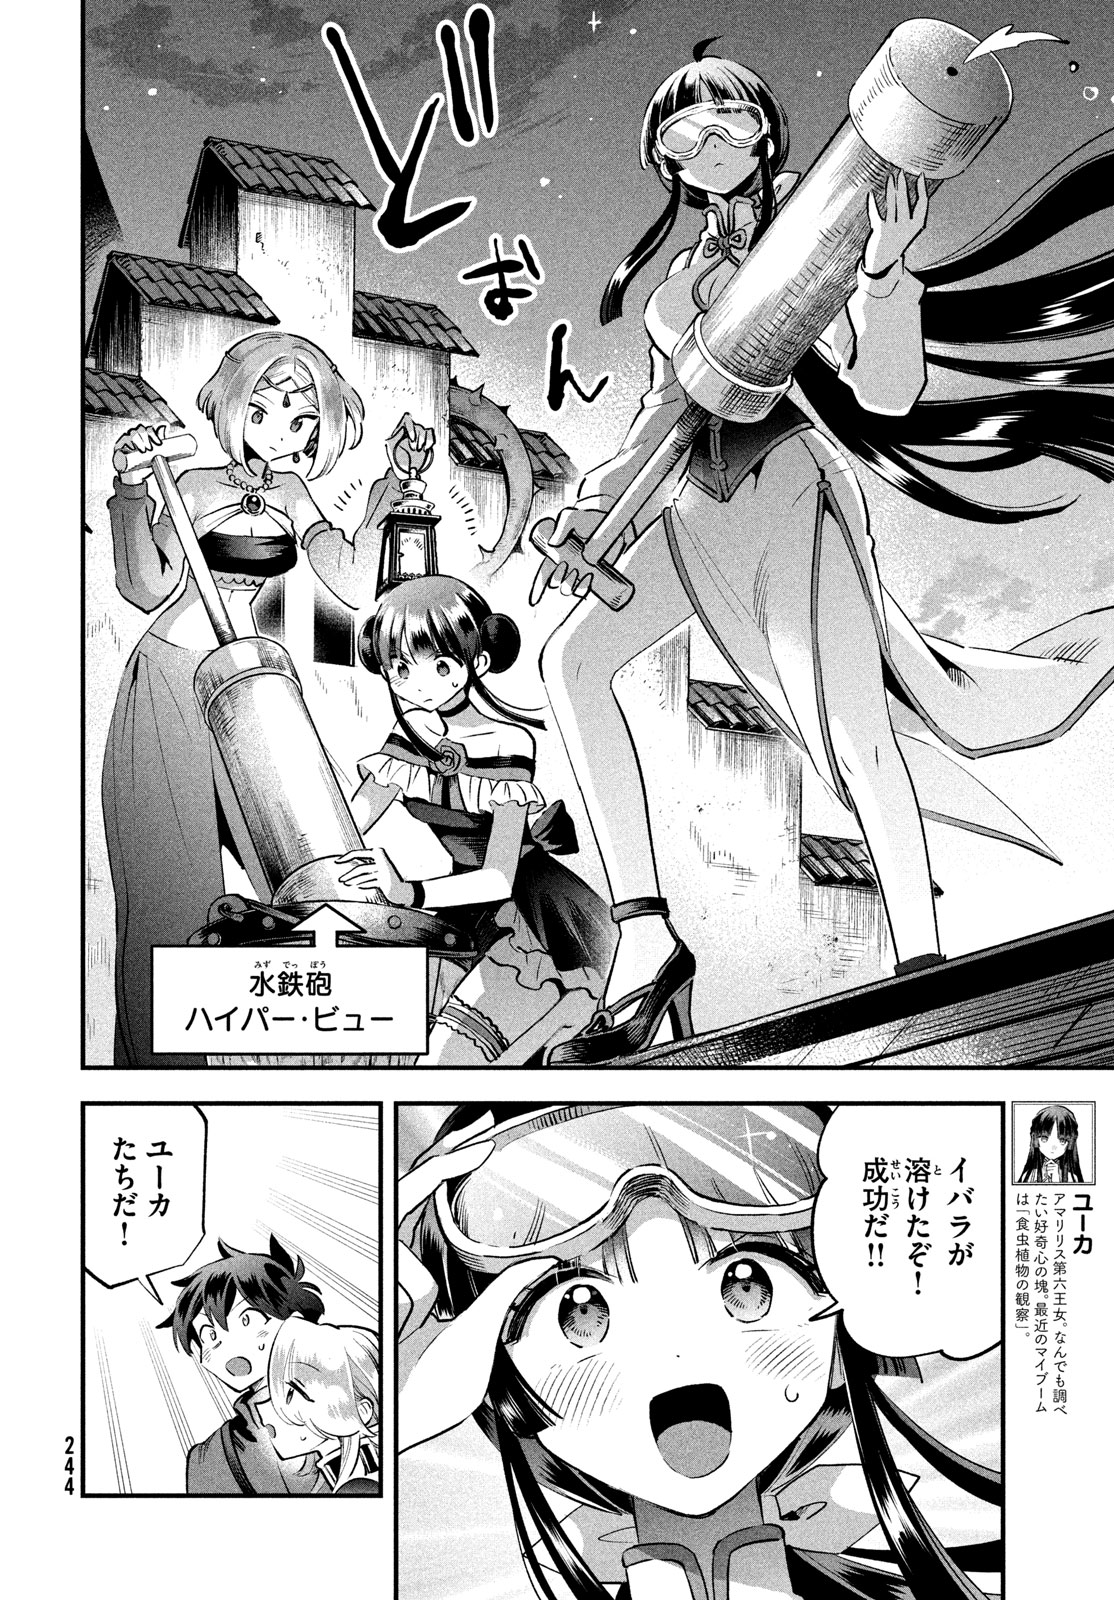 7-nin no Nemuri Hime - Chapter 47 - Page 4